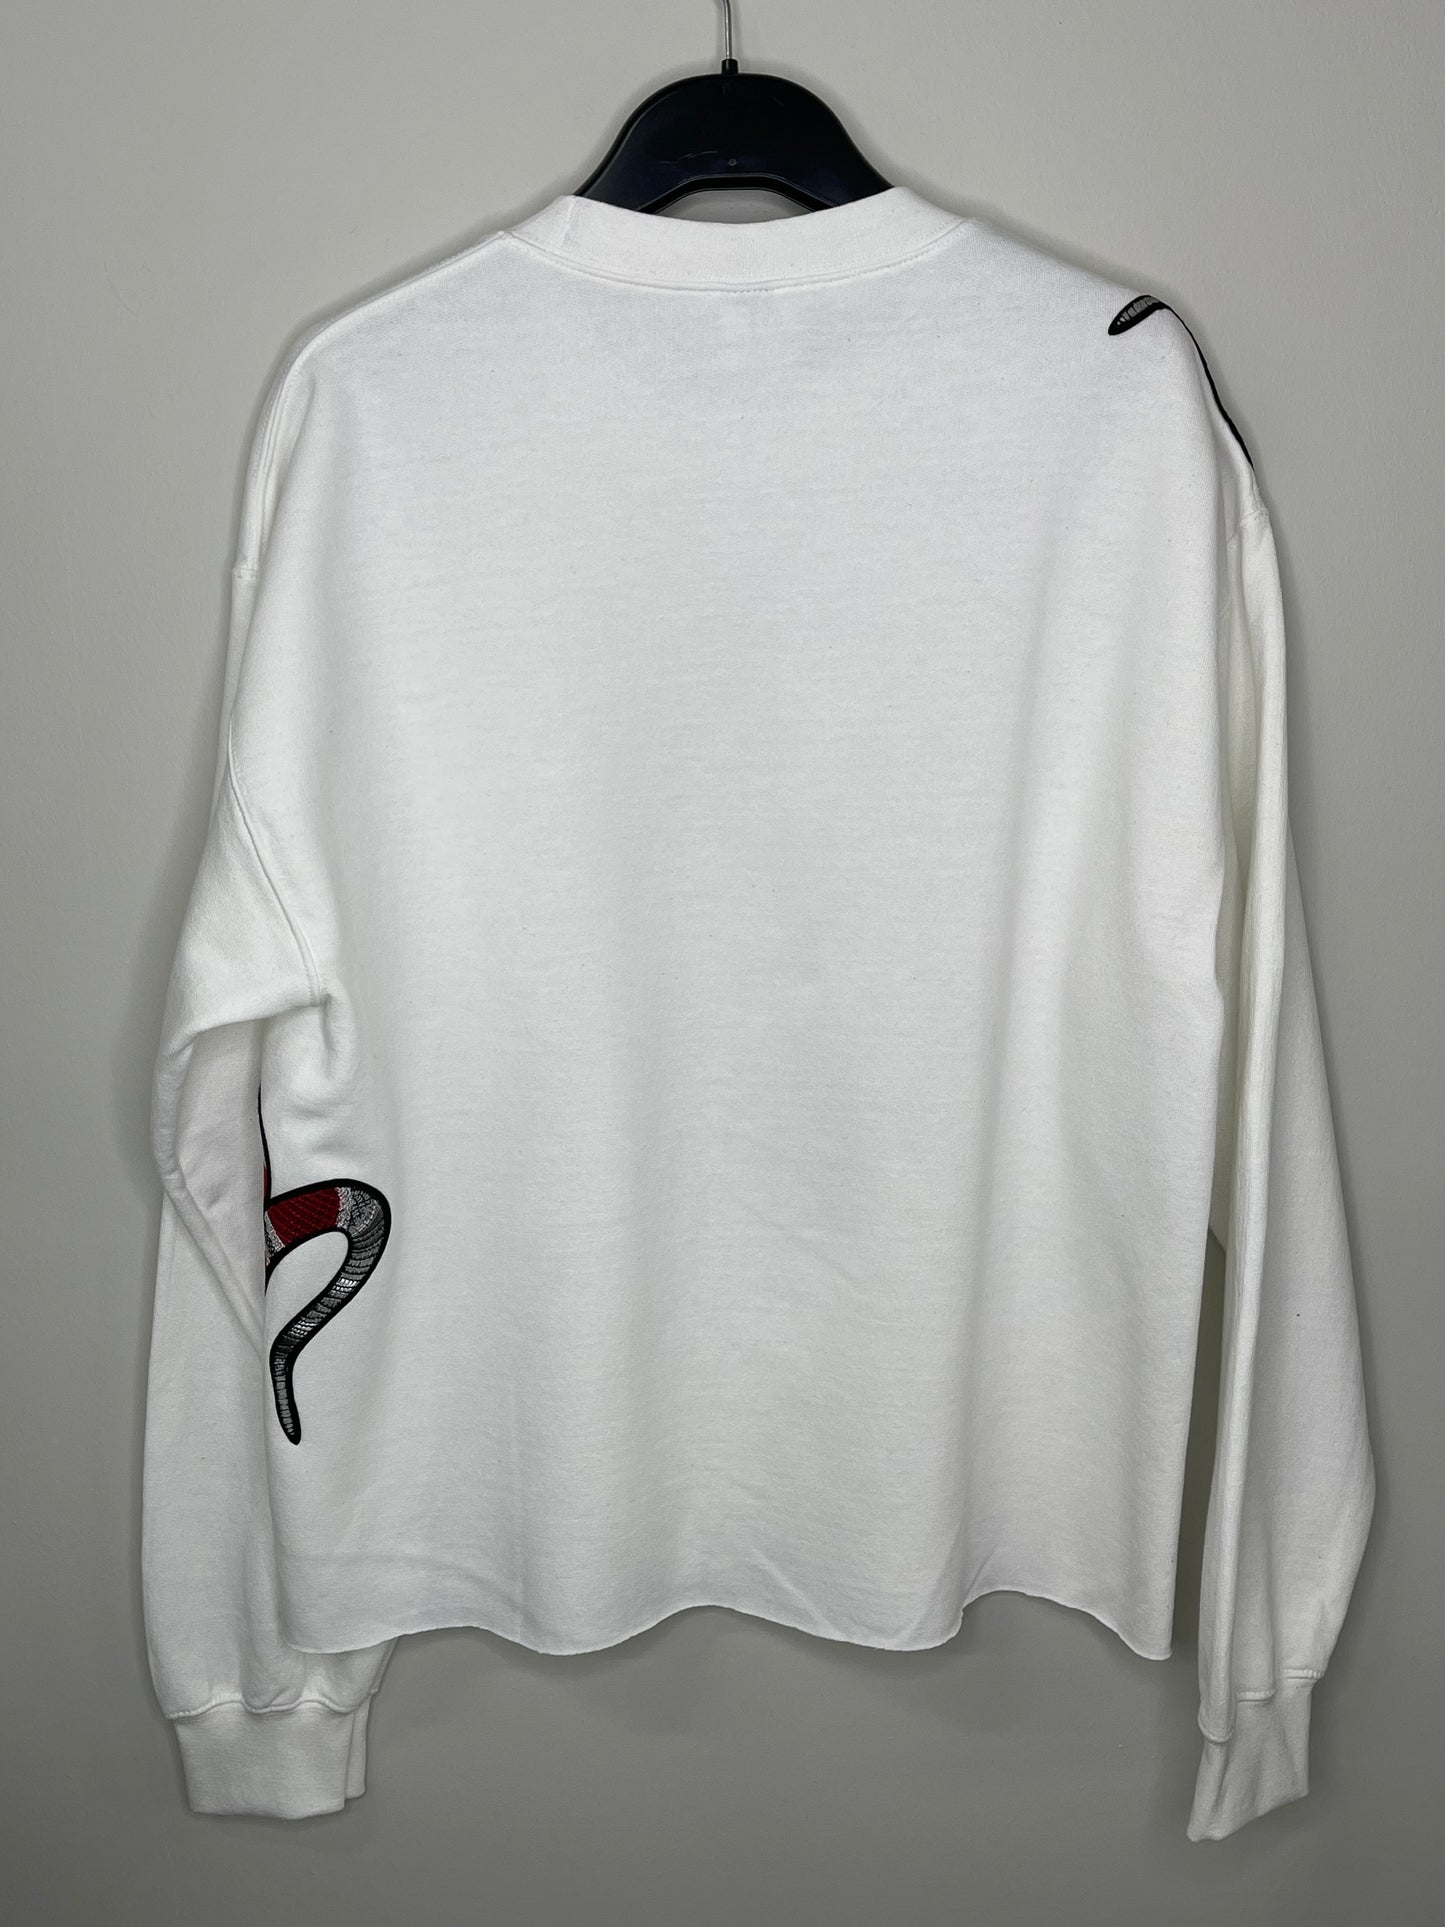 Sweatshirt, Crewneck White, Red Snakes